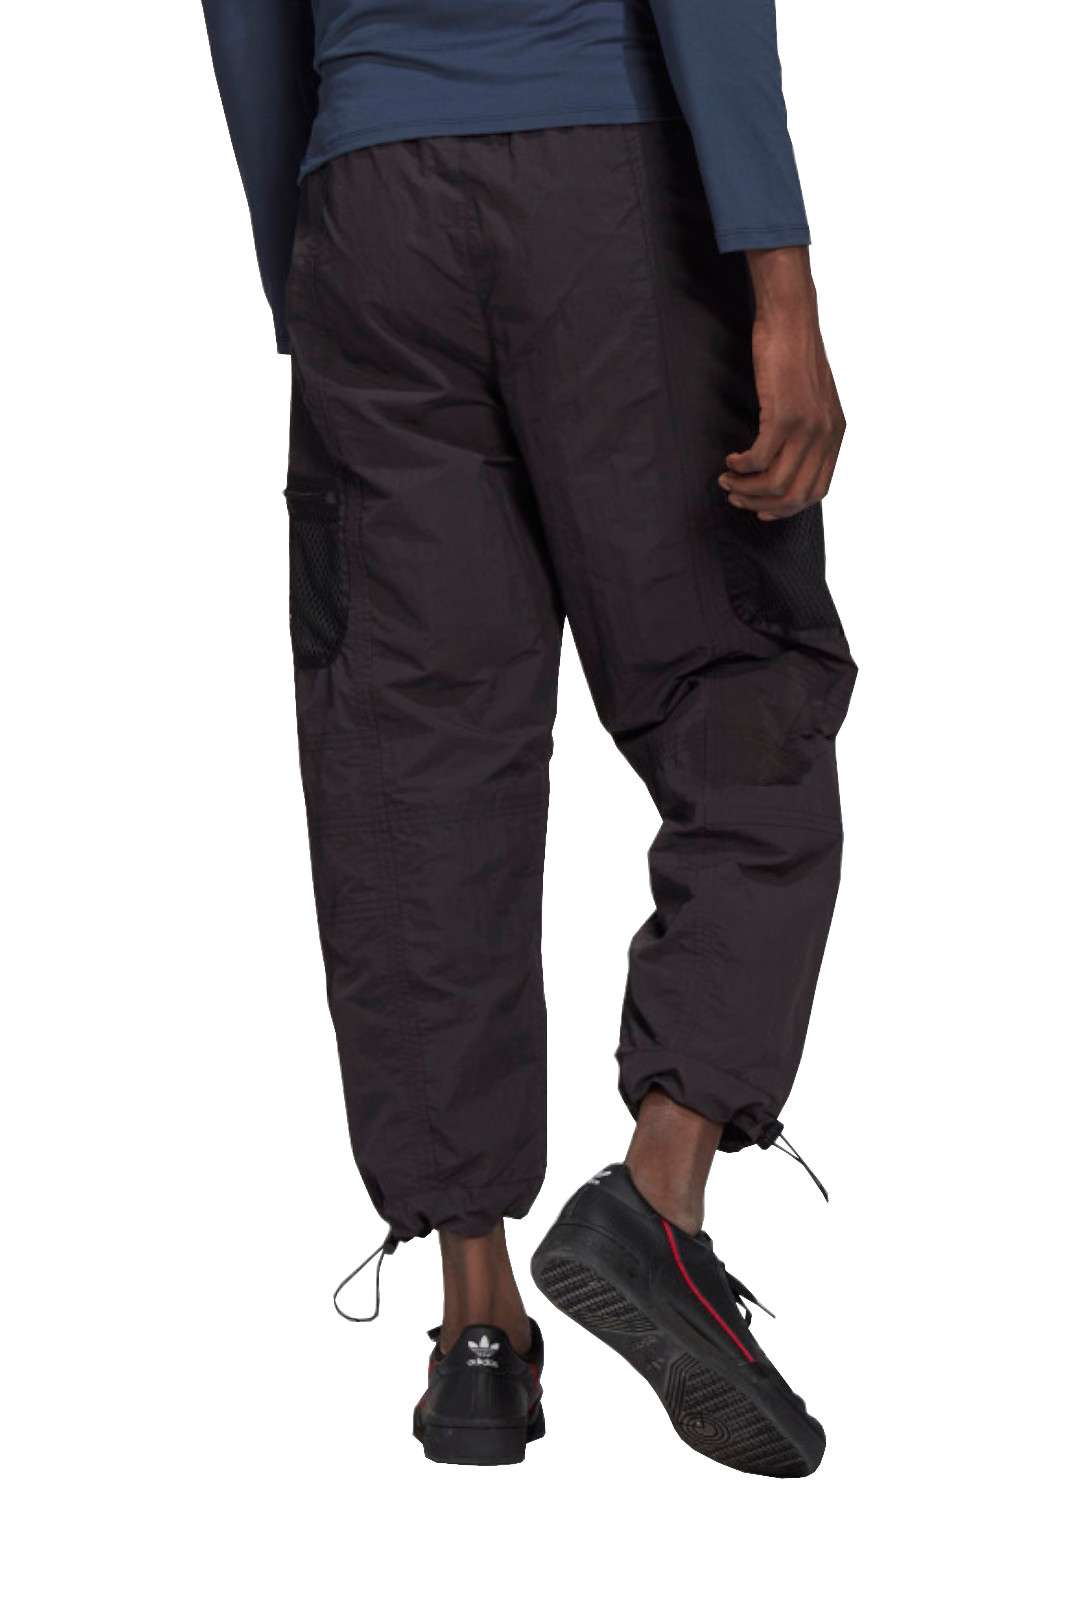 Adidas men's ADVENTURE WOVEN CARGO trousers